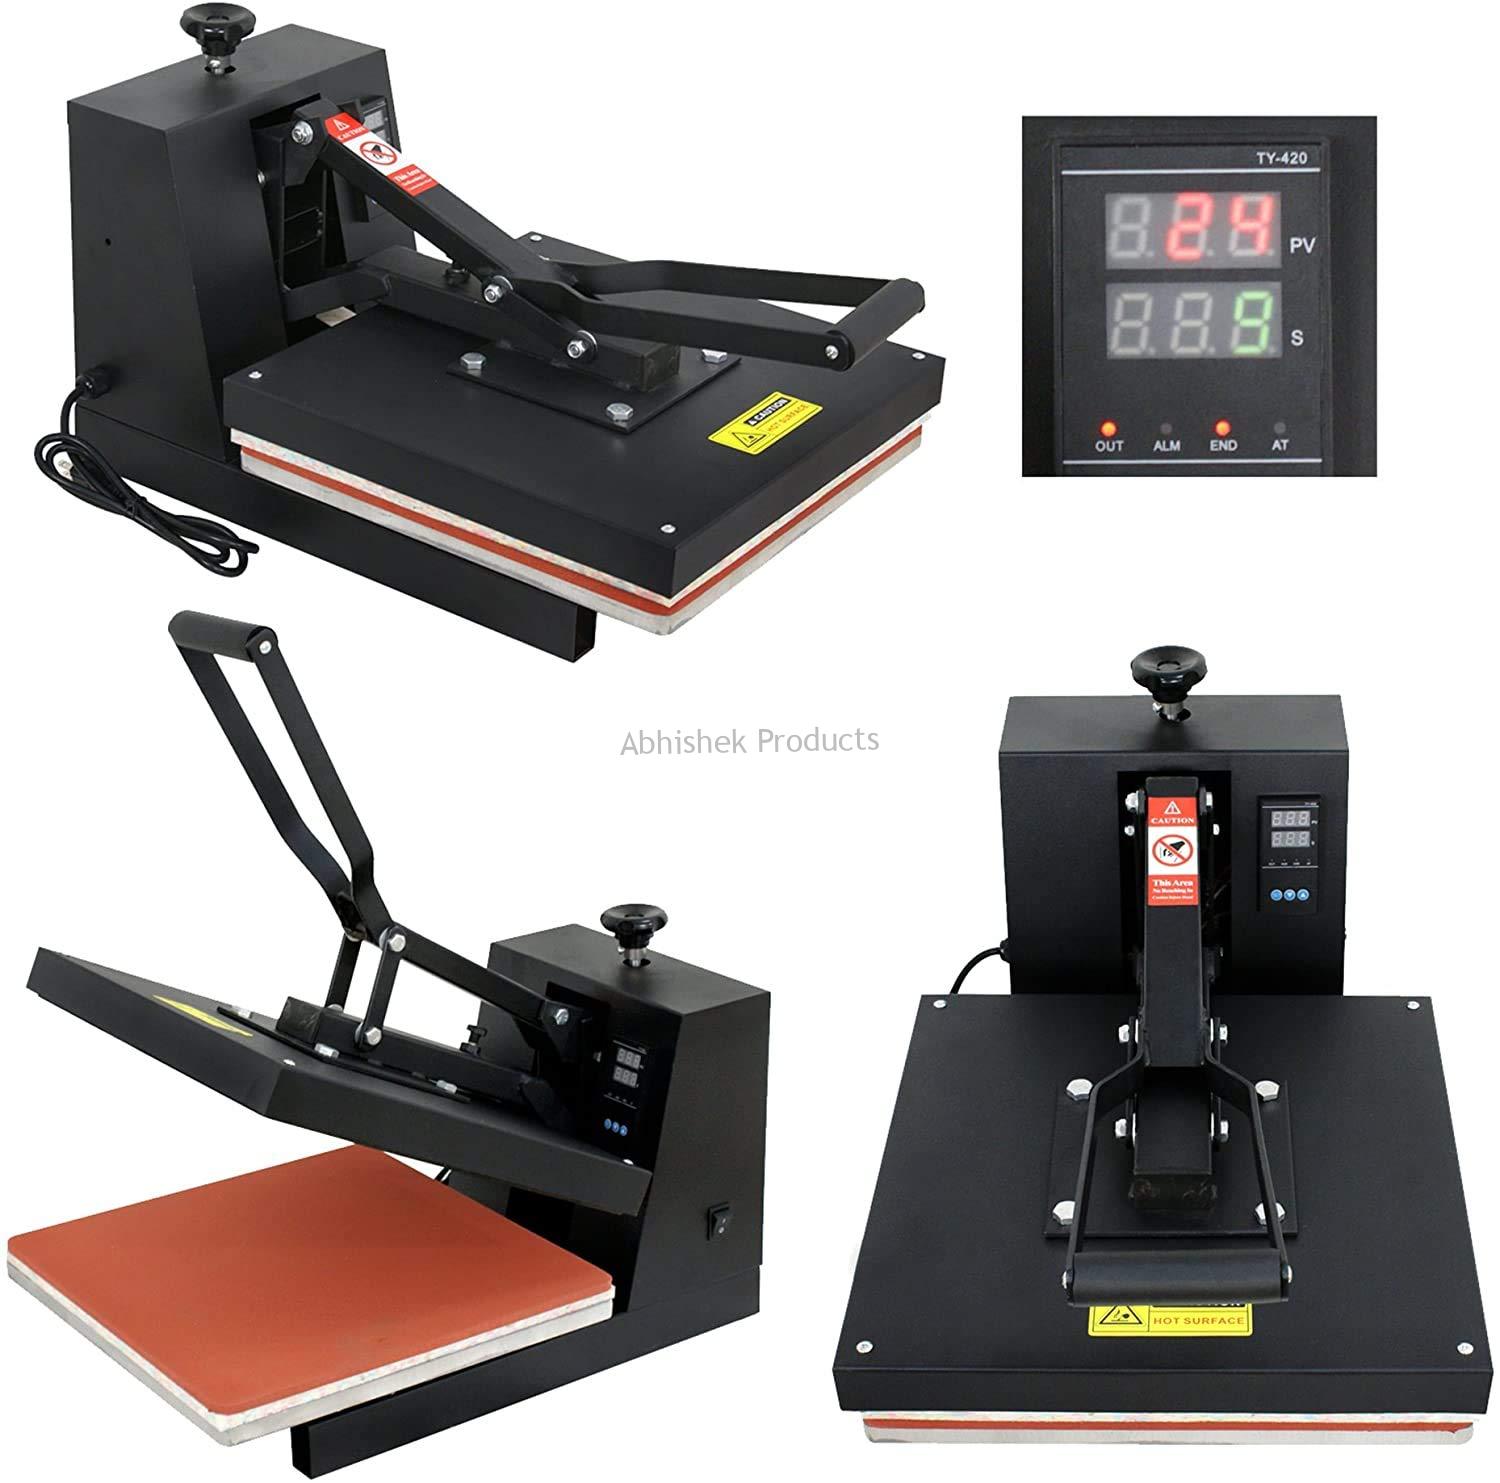 VEVOR Heat Press 16x20, 1700W Power Heat Press Machine, Fast